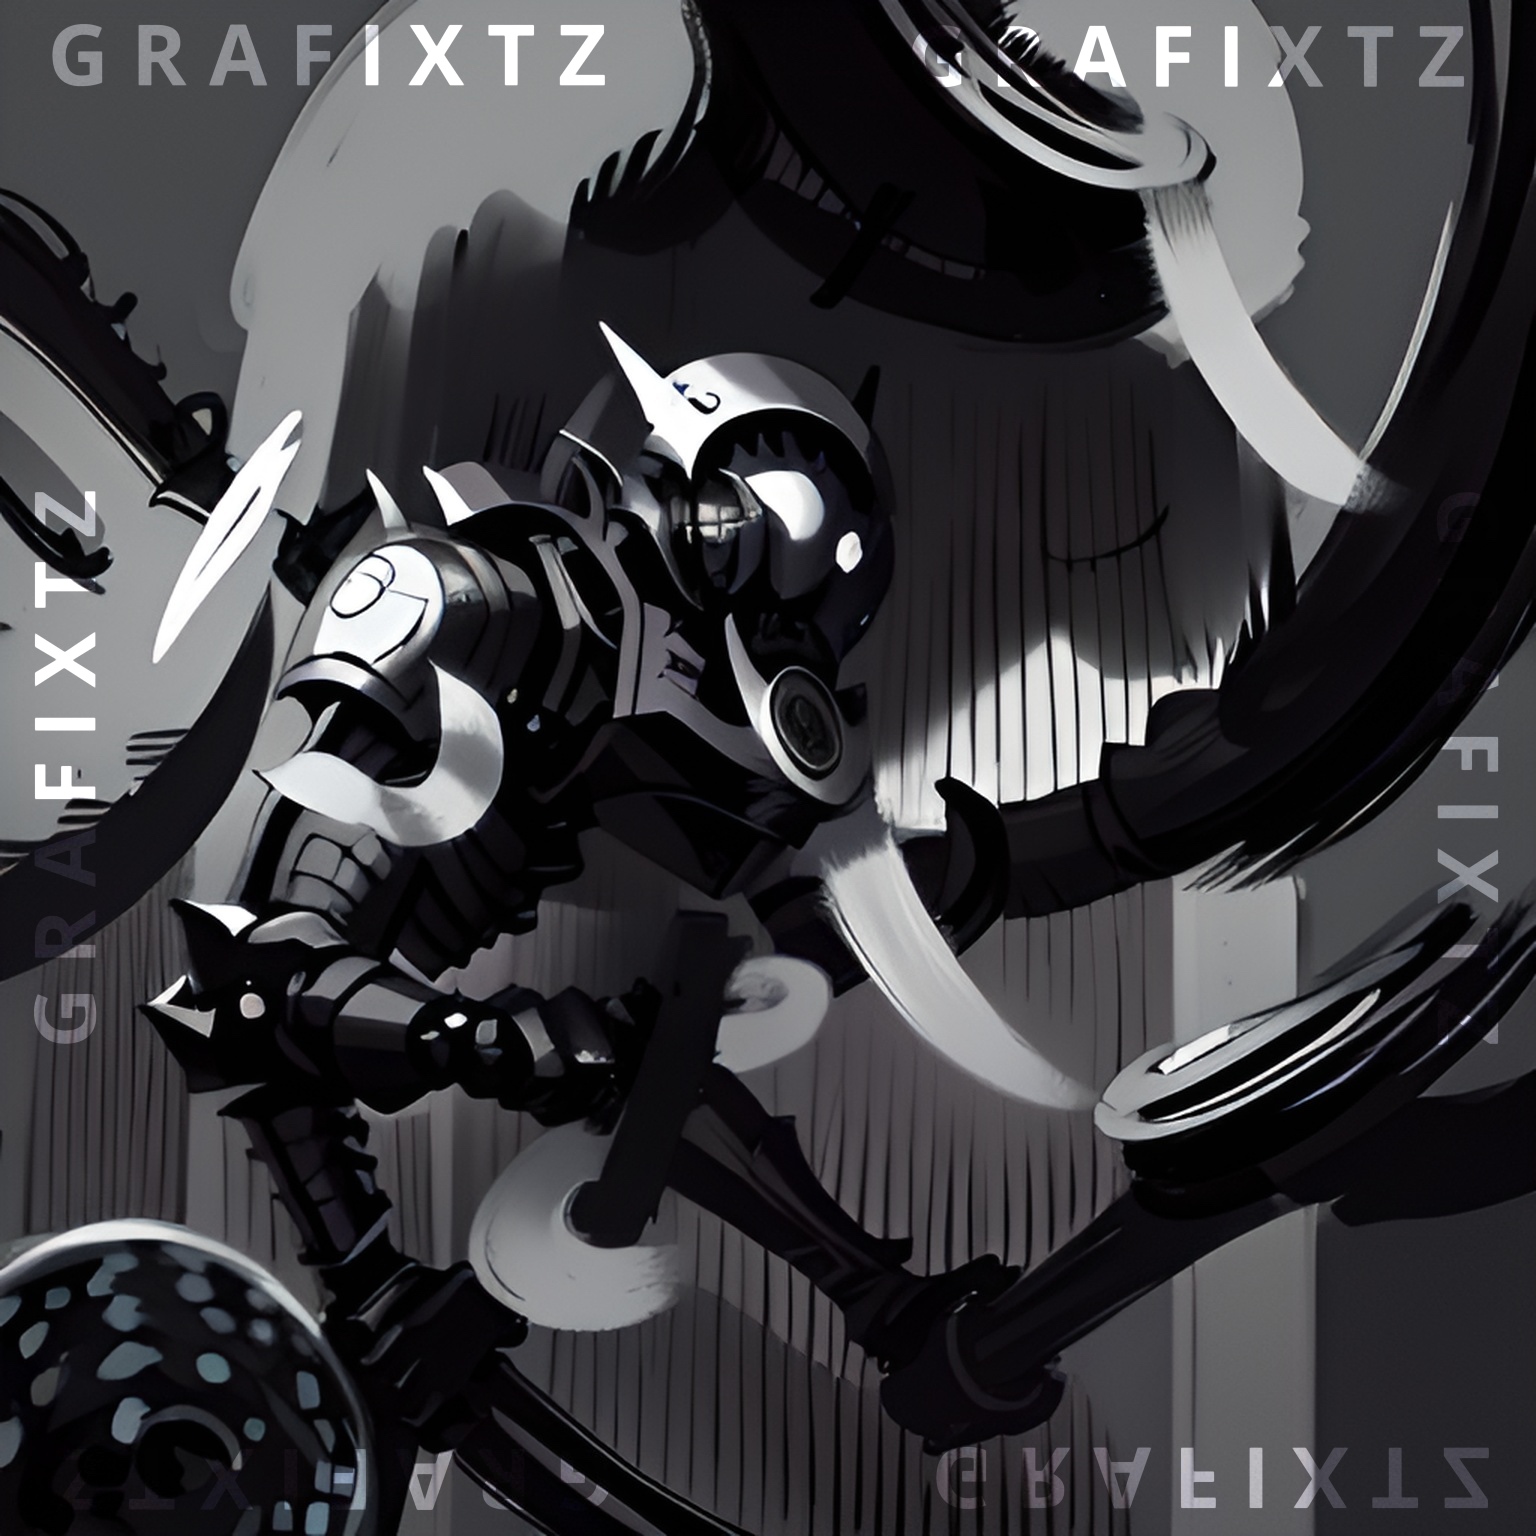 Grievance - Grafixtz